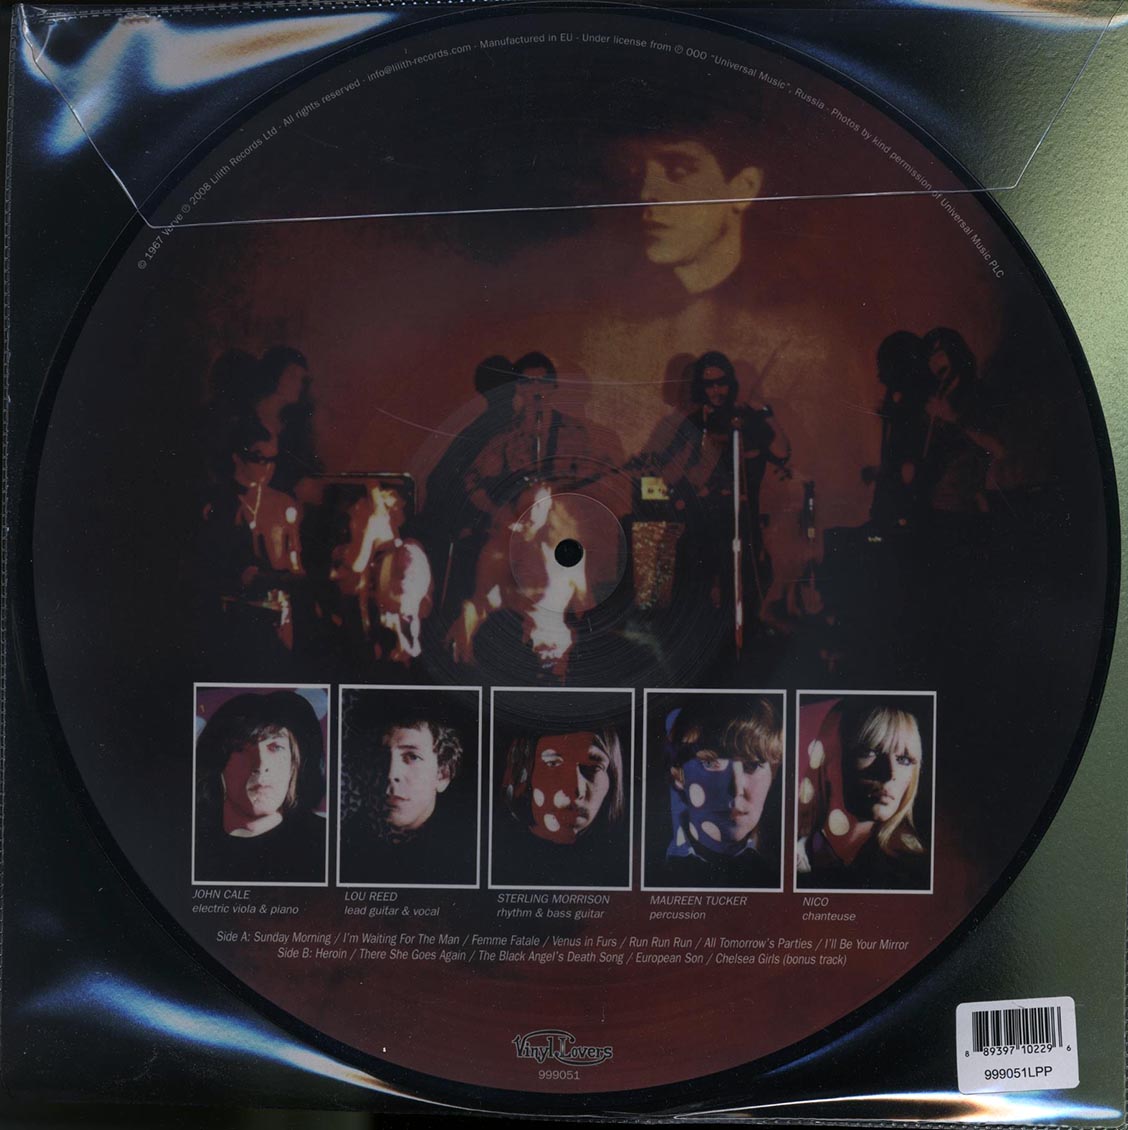 The Velvet Underground - The Velvet Underground & Nico [2008 Reissue Picture Disc] [New Vinyl Record LP]